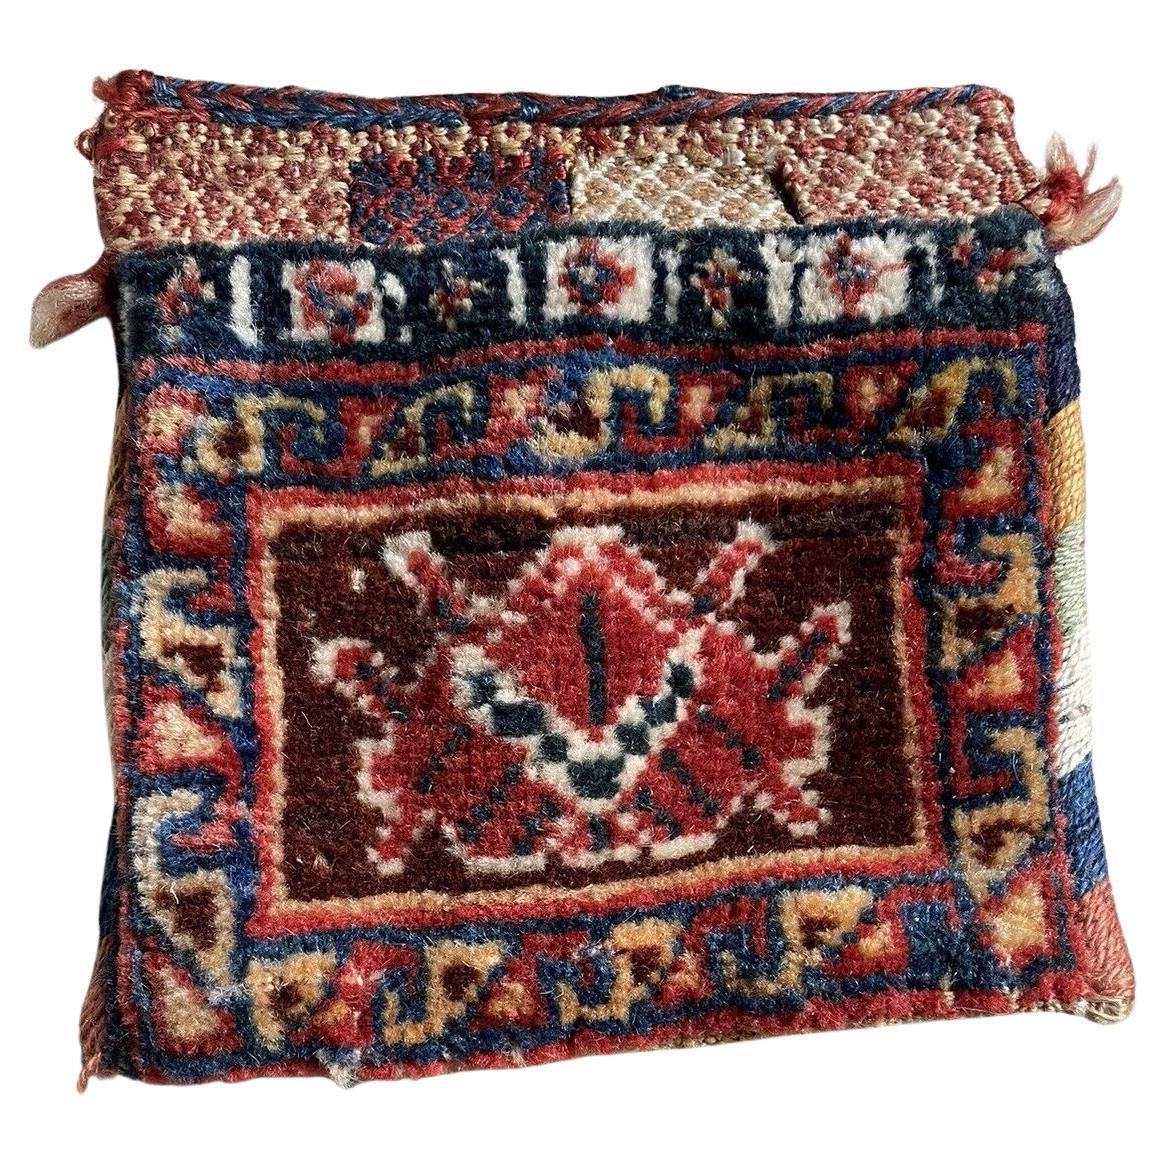 Handmade Antique Persian Gashkai Small Bag 6" x 6", 1900s - 1N13